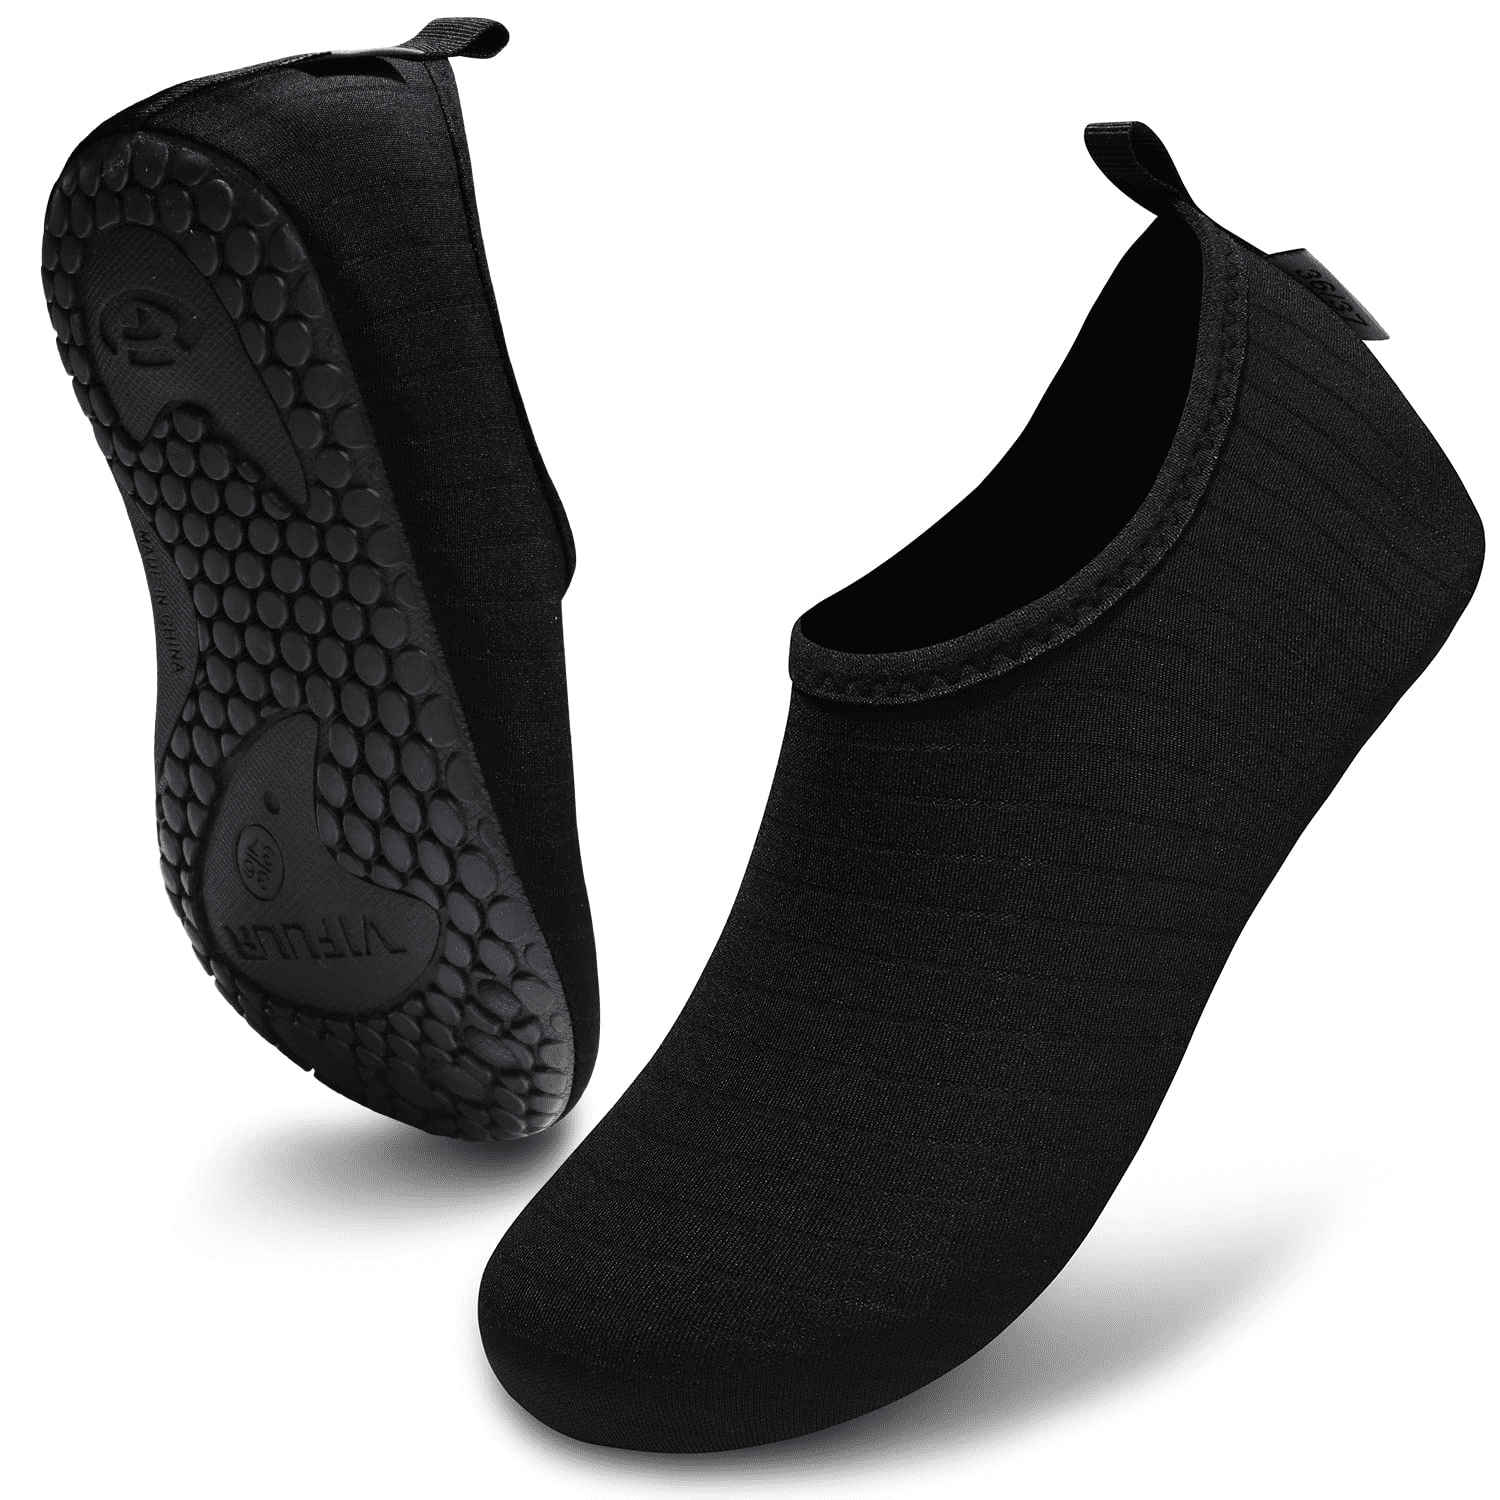 VIFUUR Water Sports Shoes Barefoot Quick-Dry Aqua Yoga Socks Slip-on for  Men Women Black, 7.5-8.5 Women/6-7 Men 